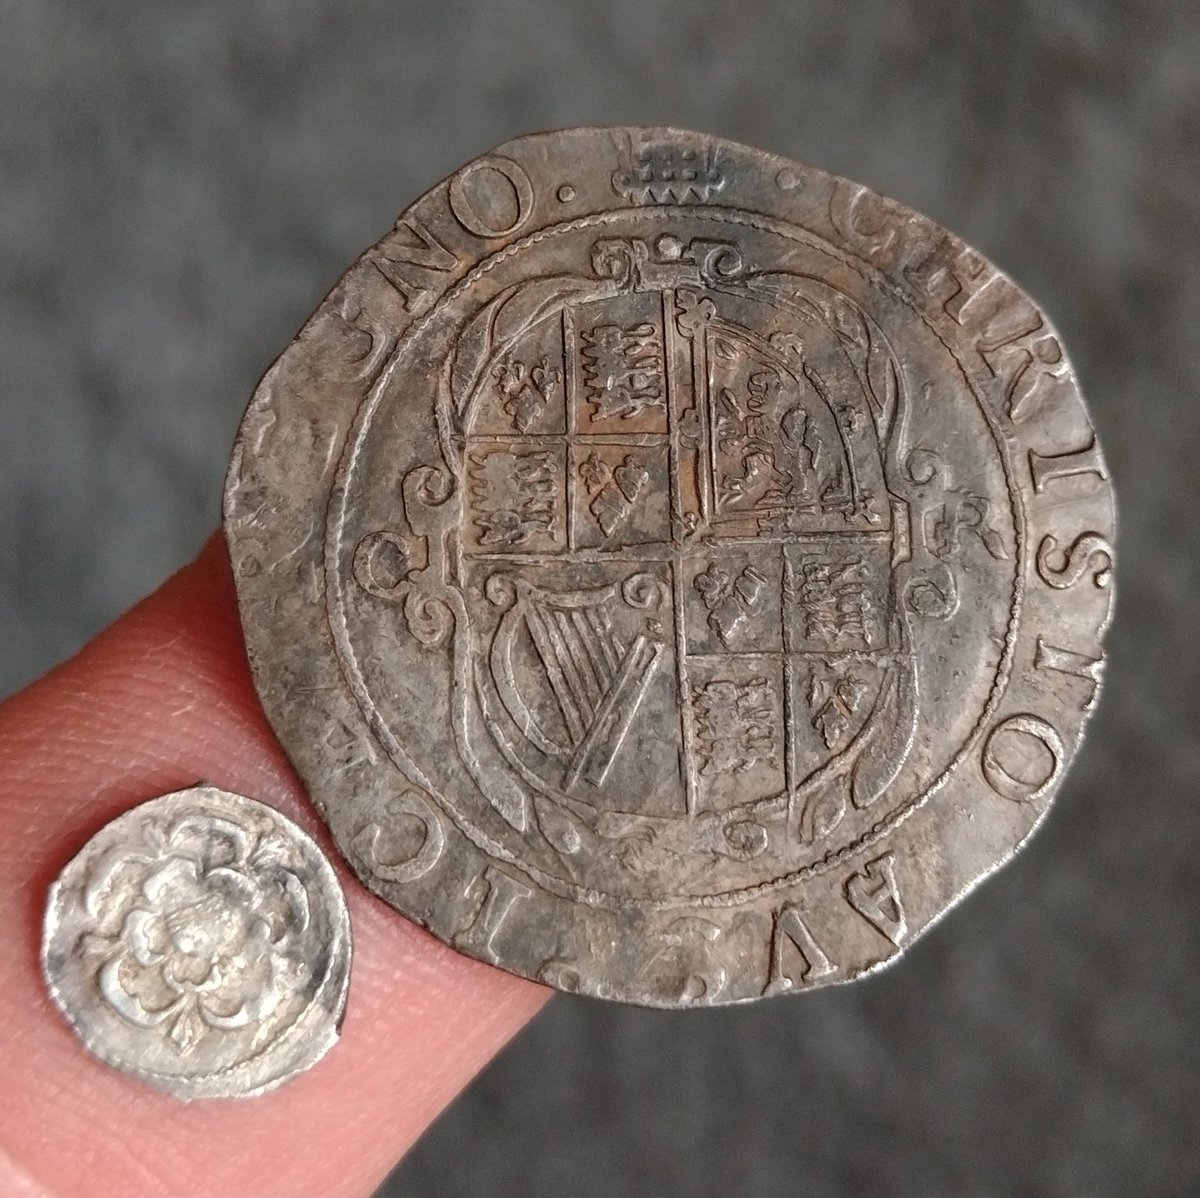 Biggest and smallest coins of Charles I I've found.
Shilling
Portcullis mint mark
5.88 gms
1633-34

Halfpenny
0.29 gms
1625-49